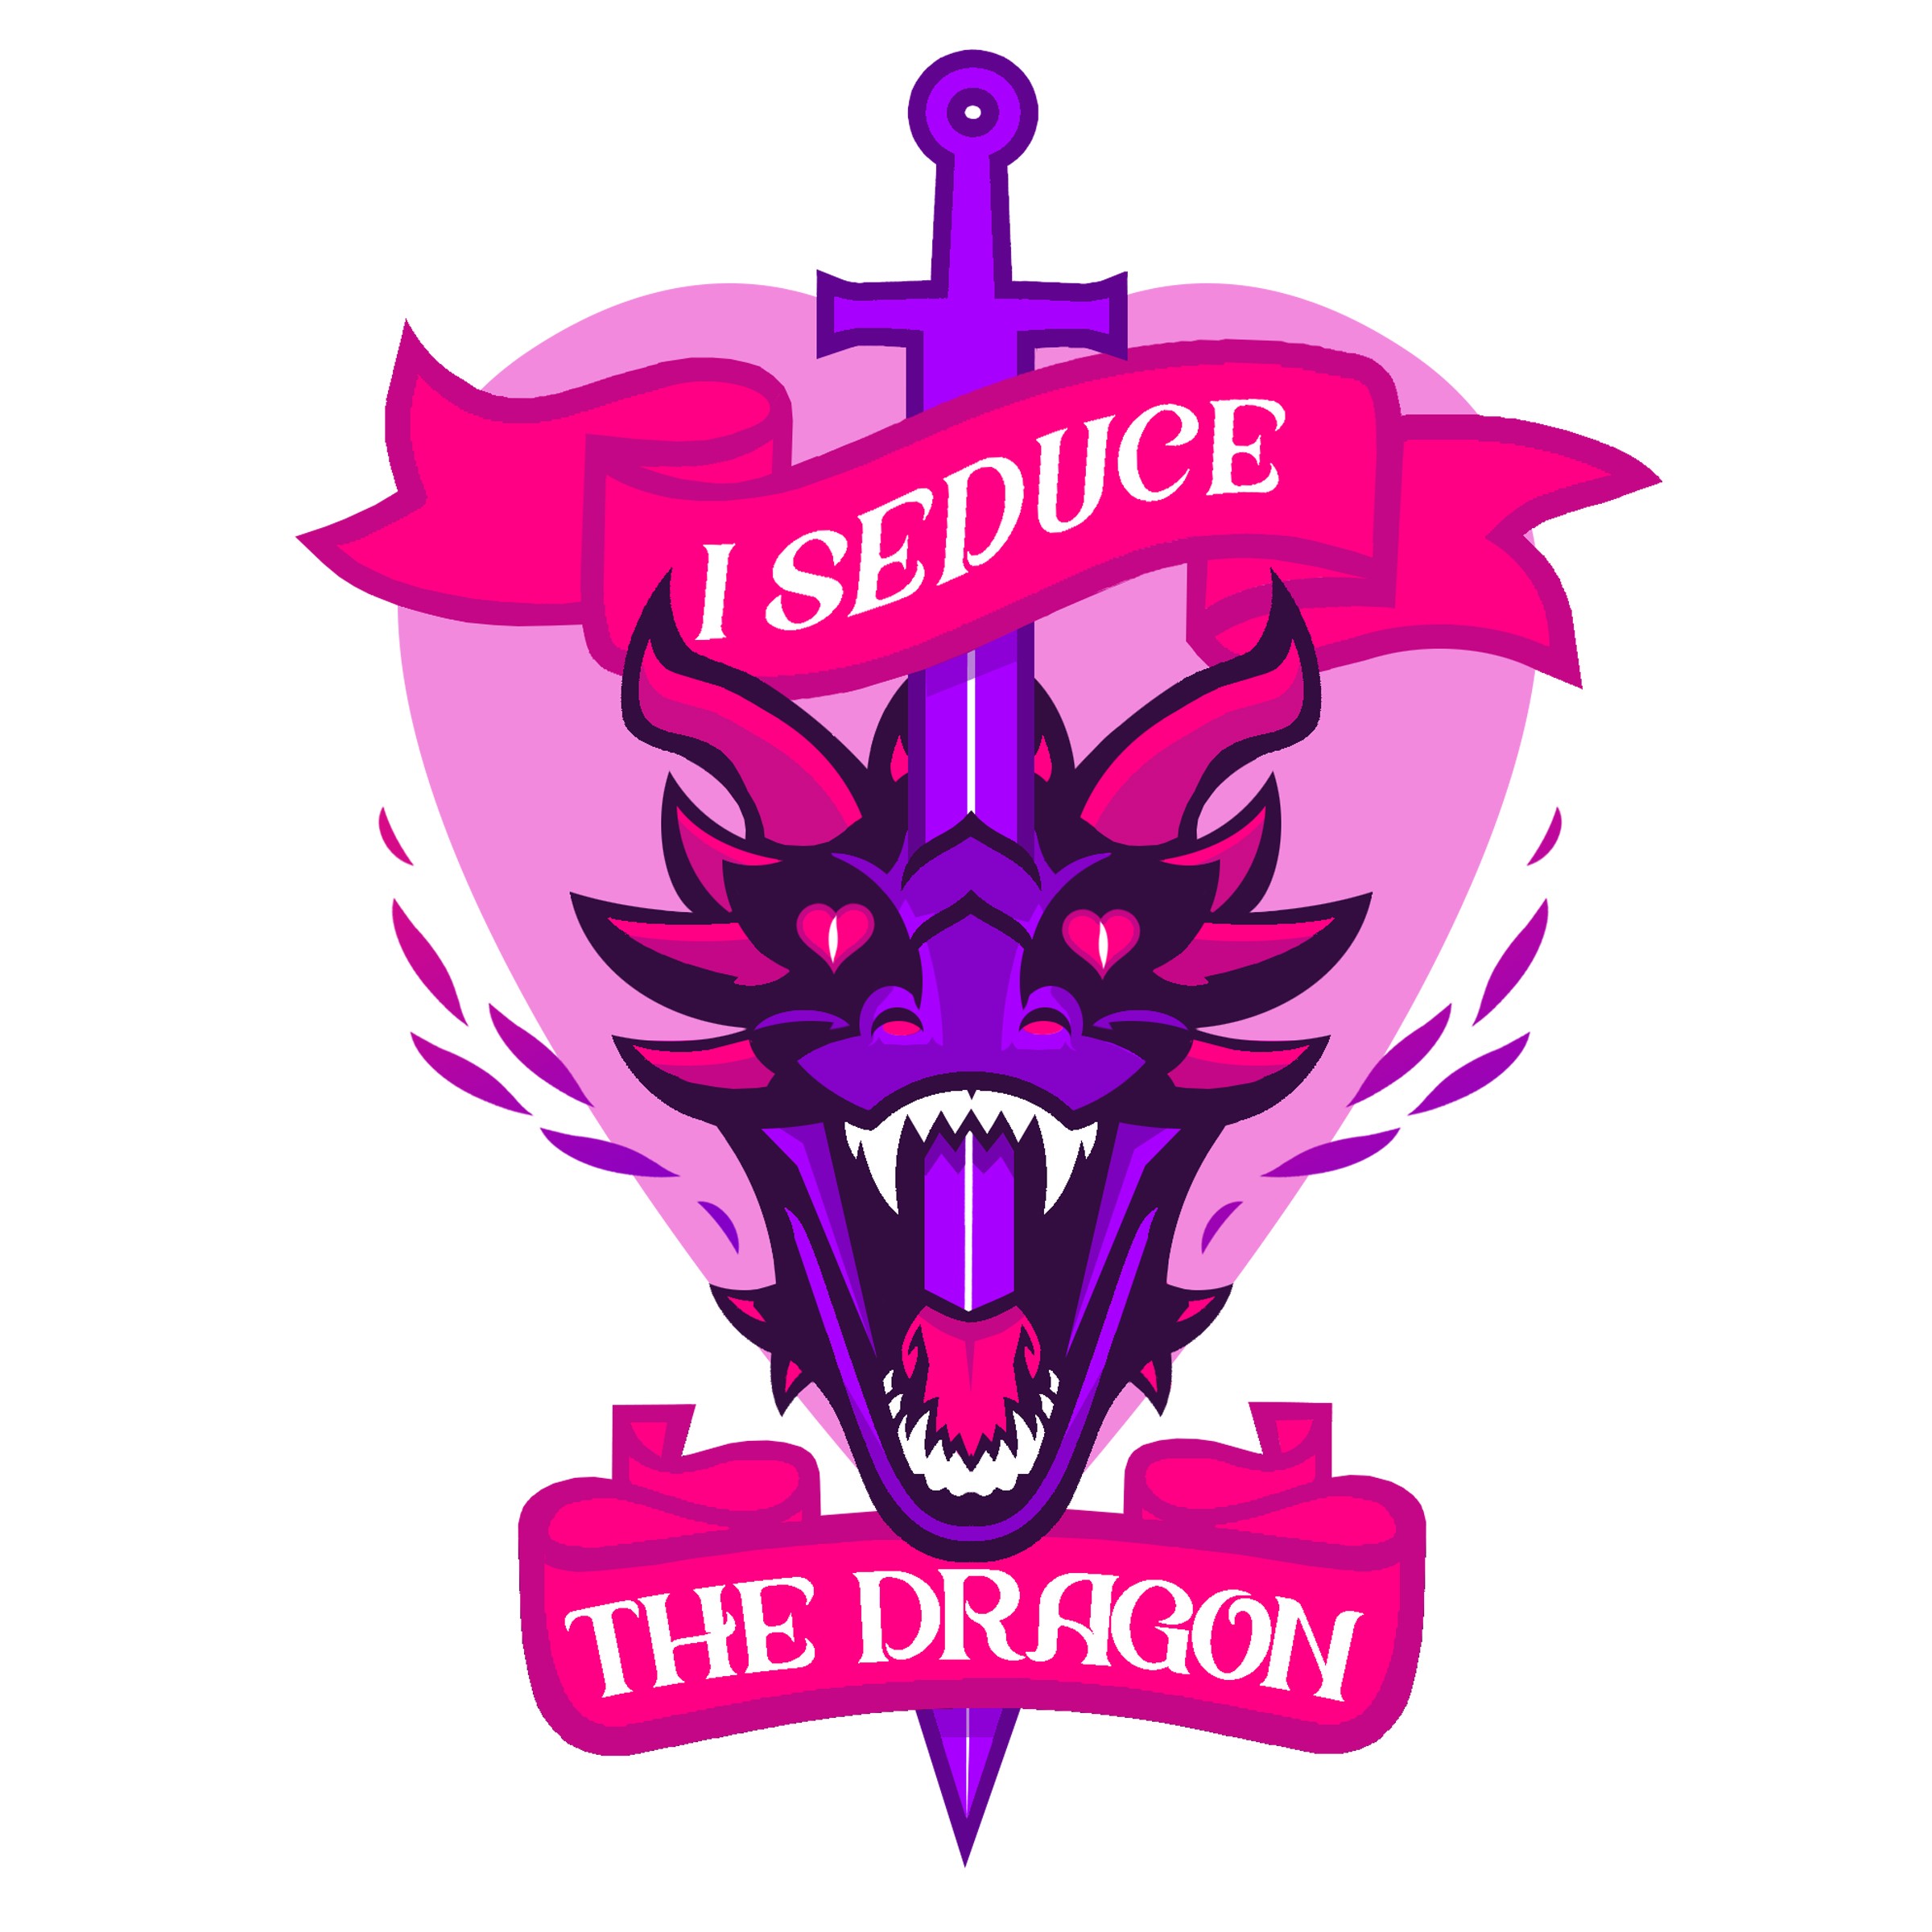 I Seduce The Dragon podcast show image